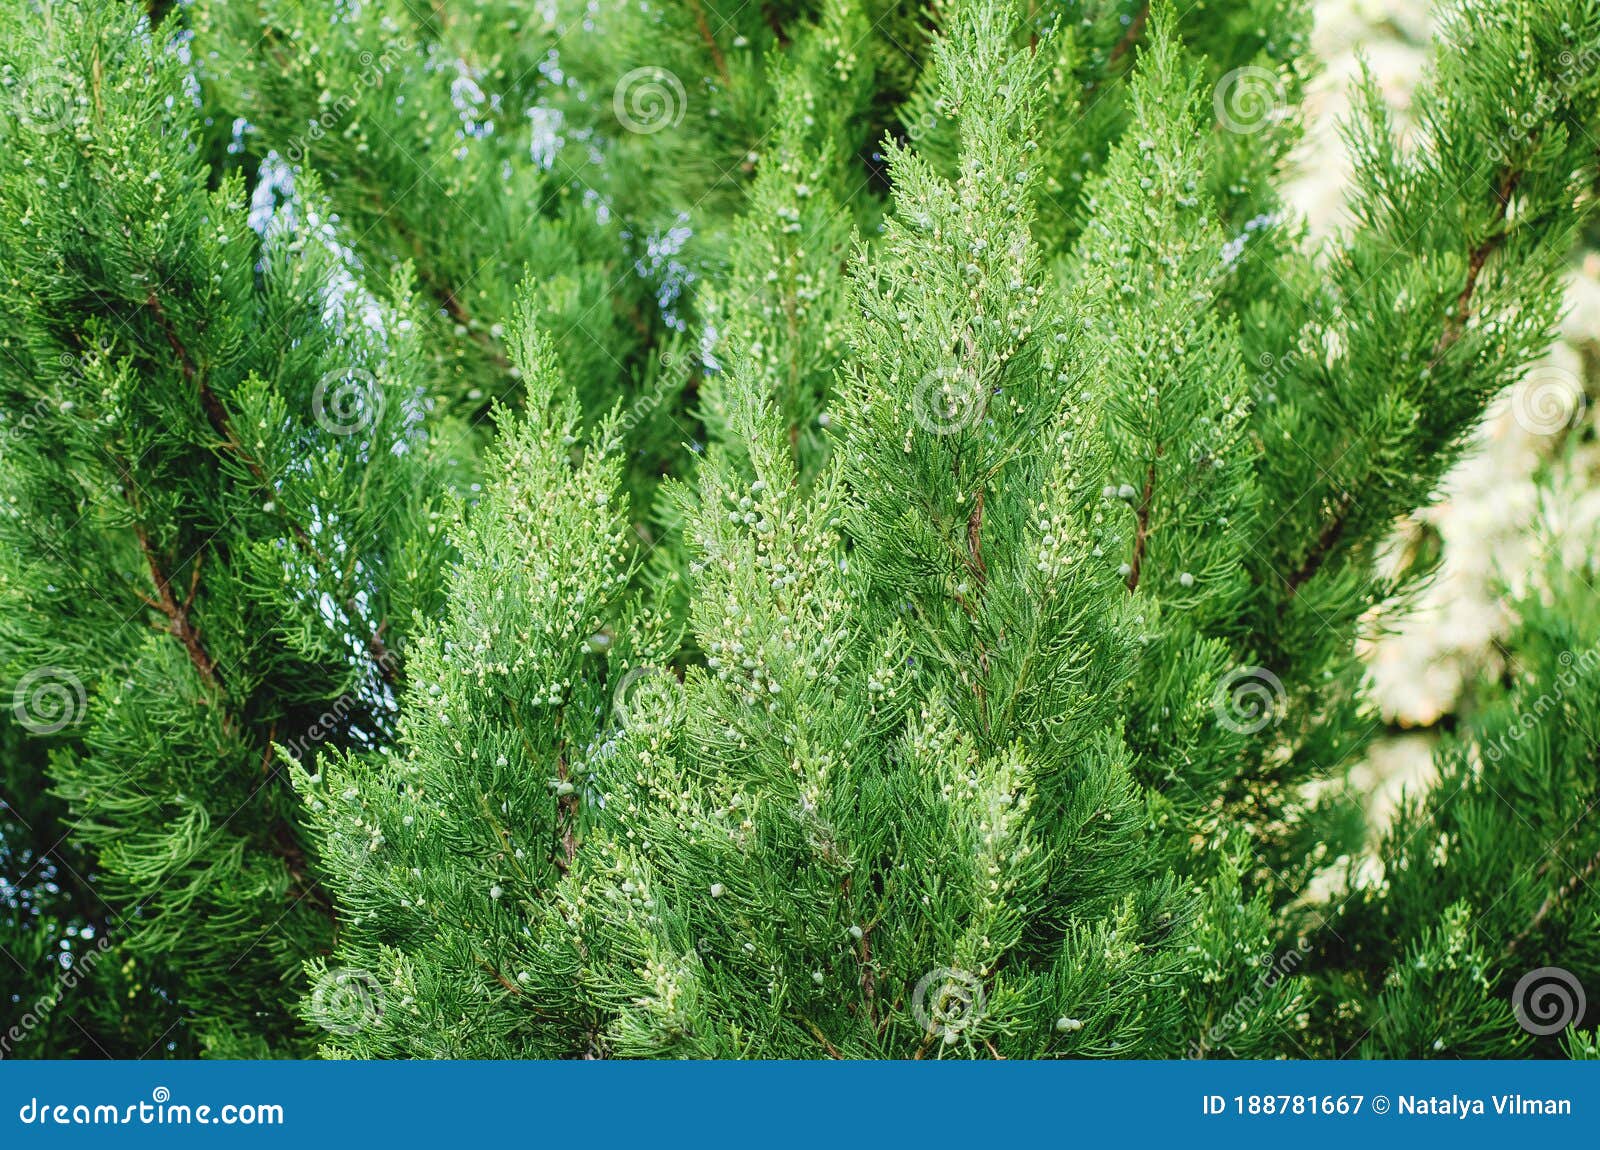 spring branch tip of red cedar tree, also called eastern redcedar, virginian juniper. beautiful natural background